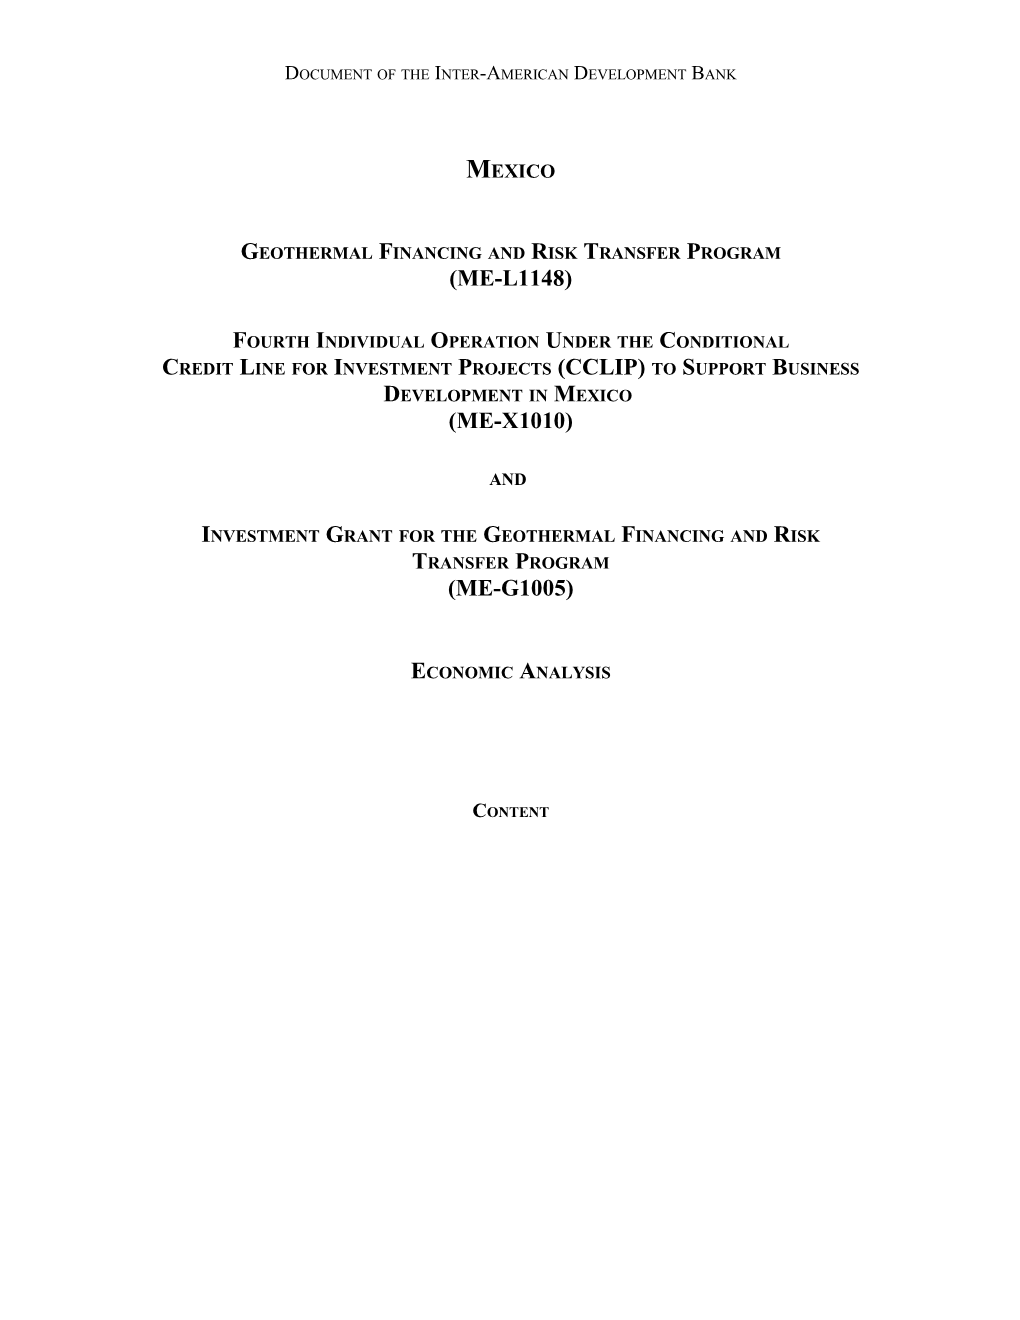 Geothermal Financing and Risk Transfer Program